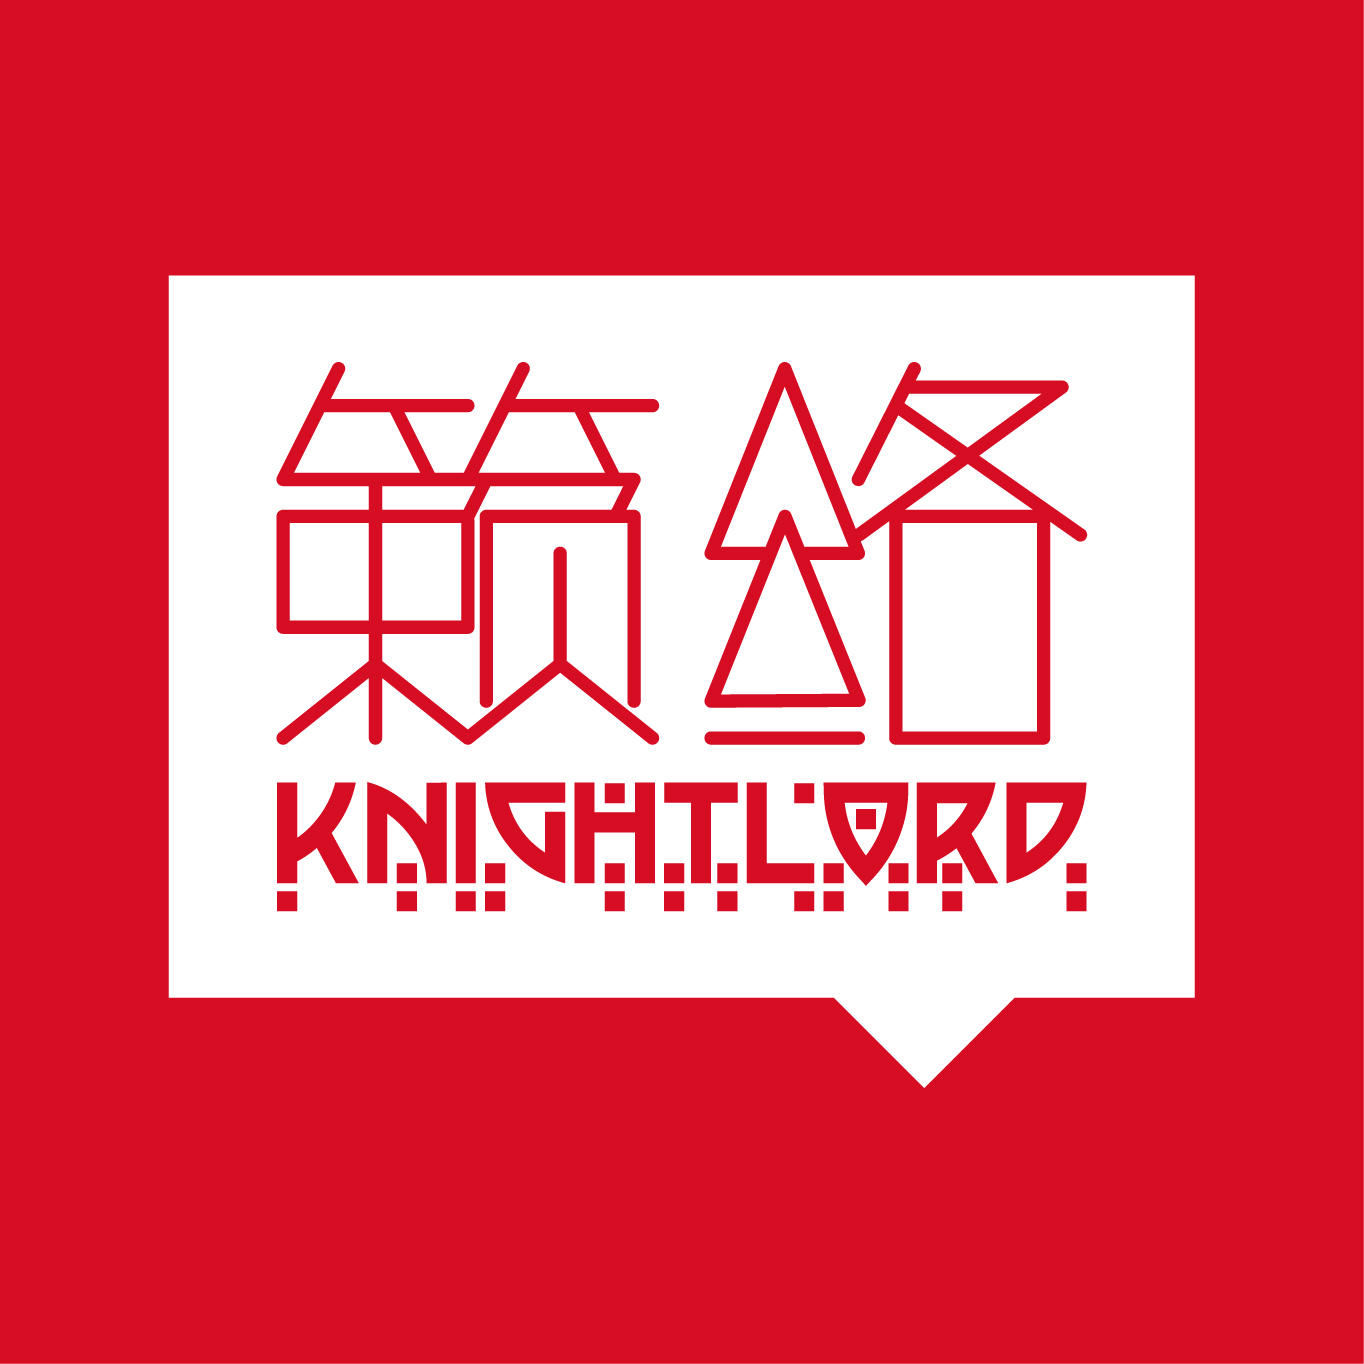 Knightlord